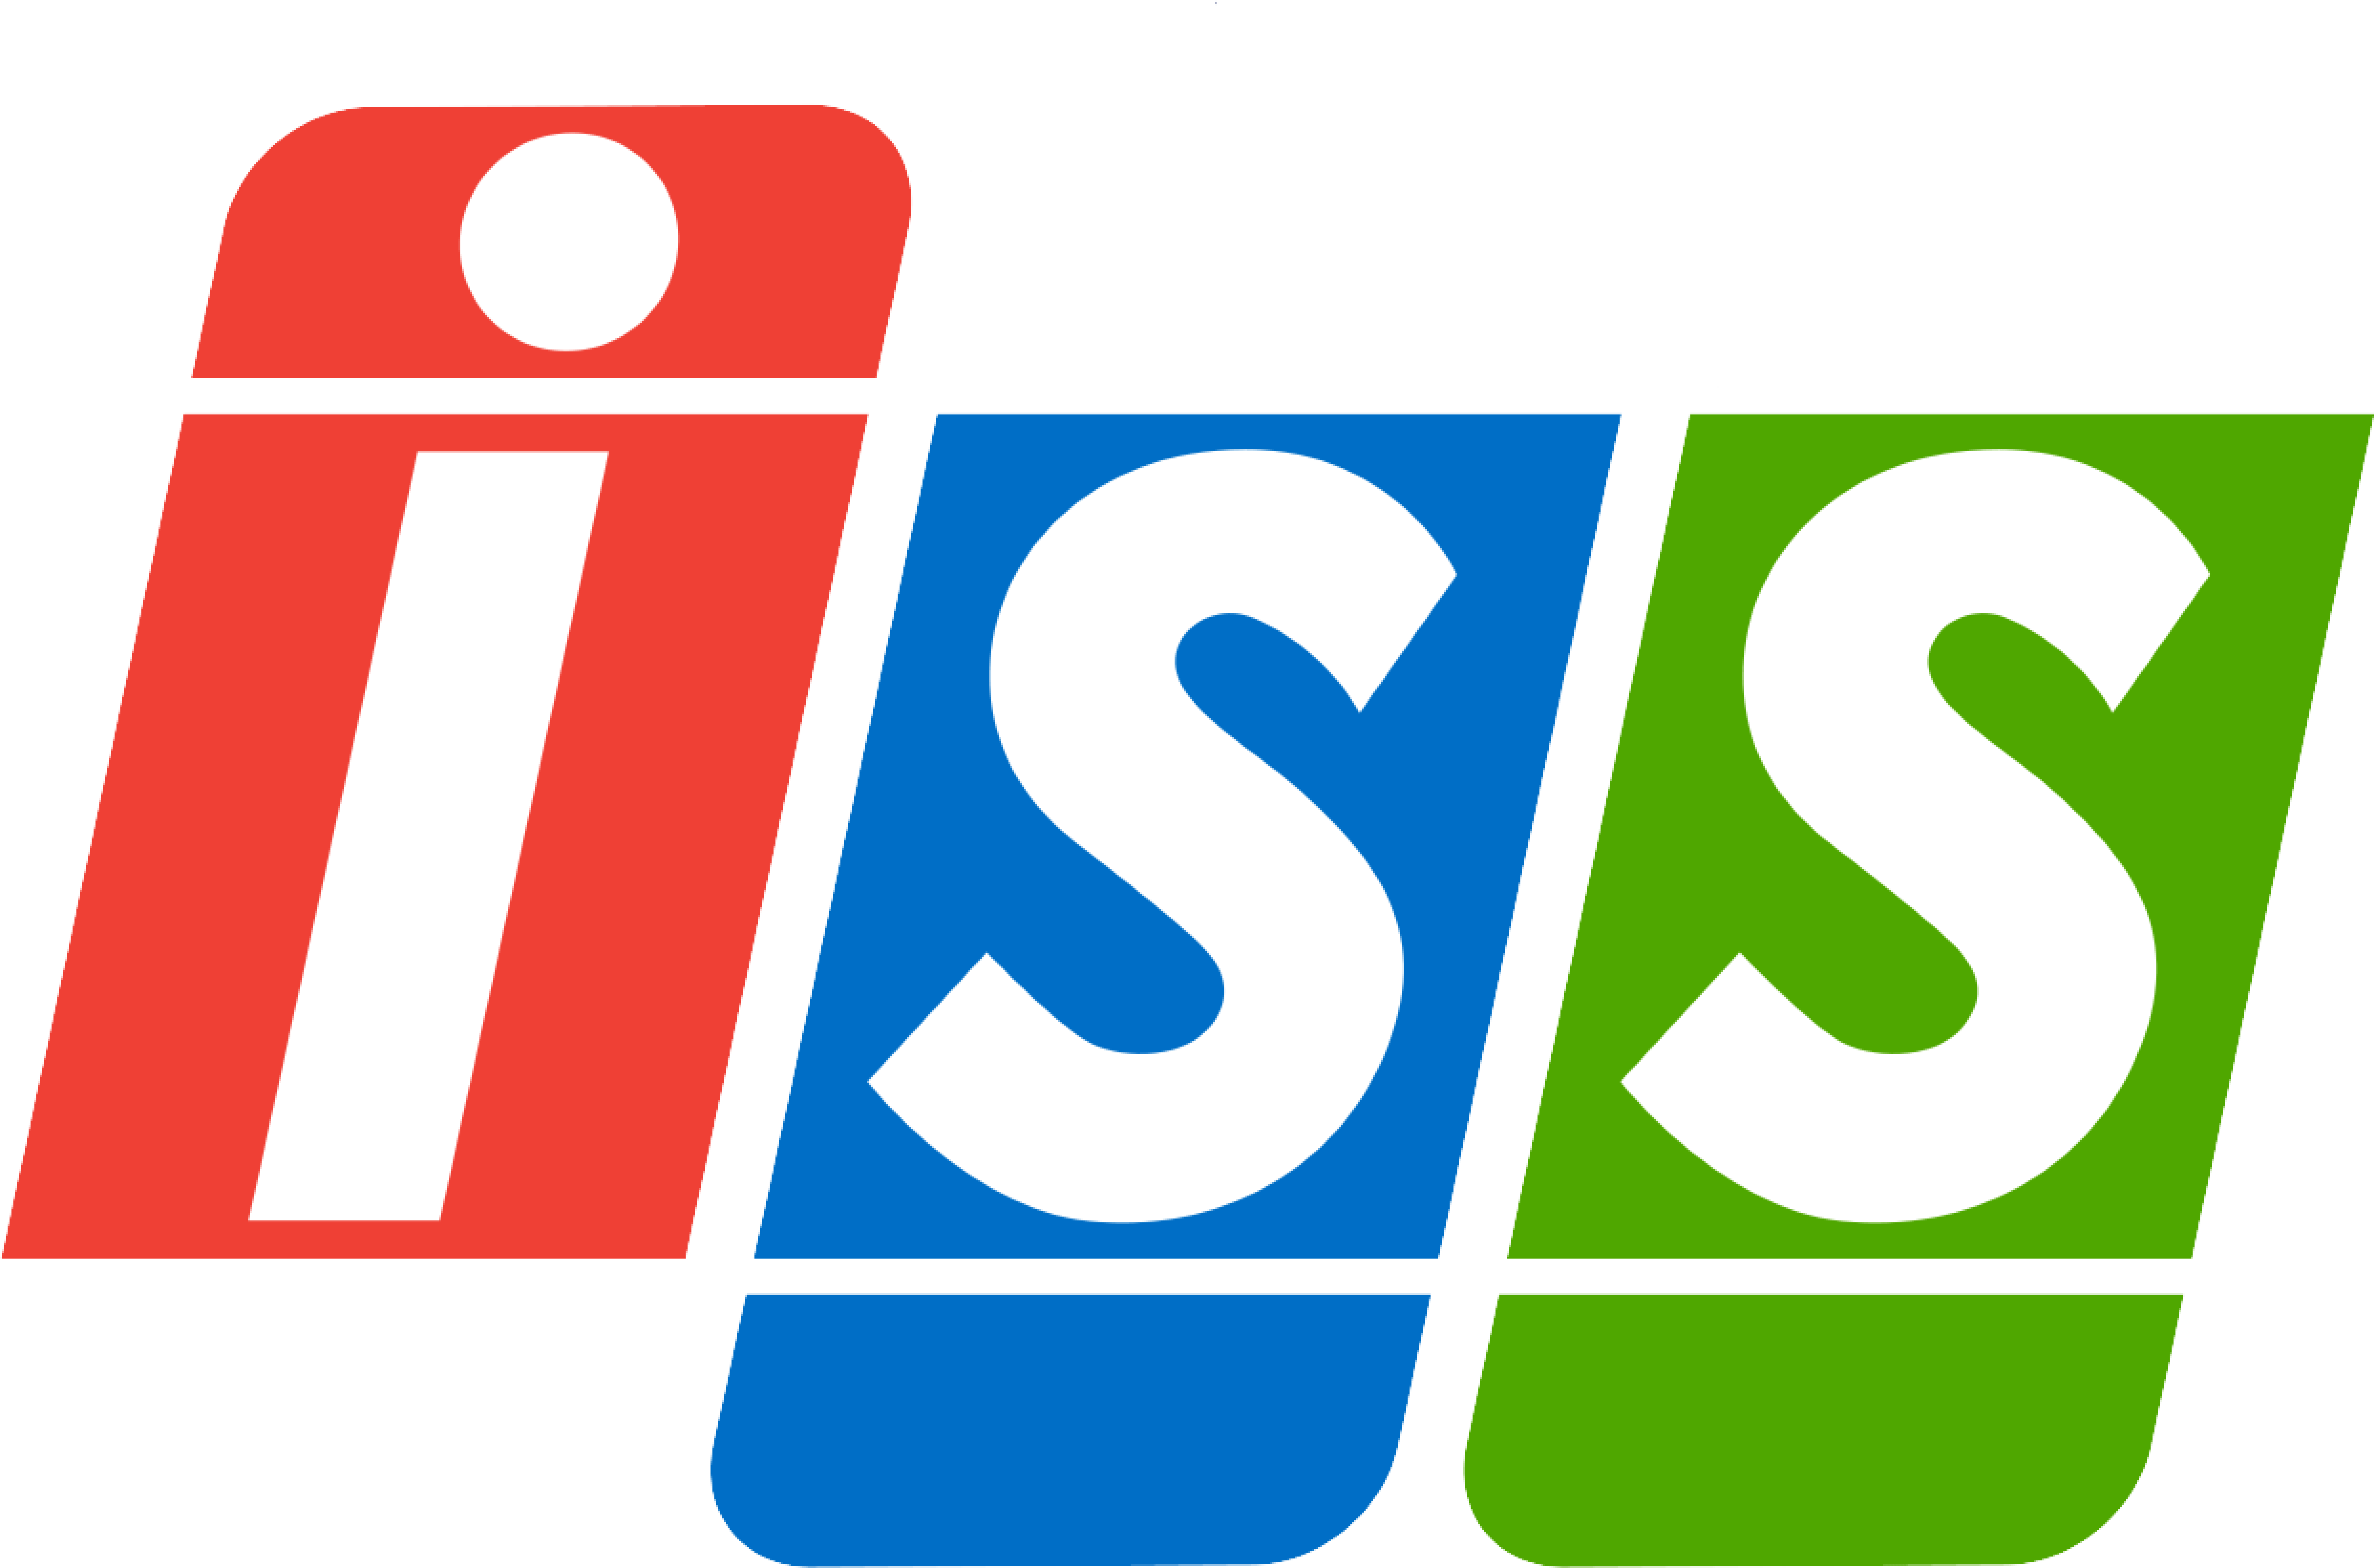 ISS Logo